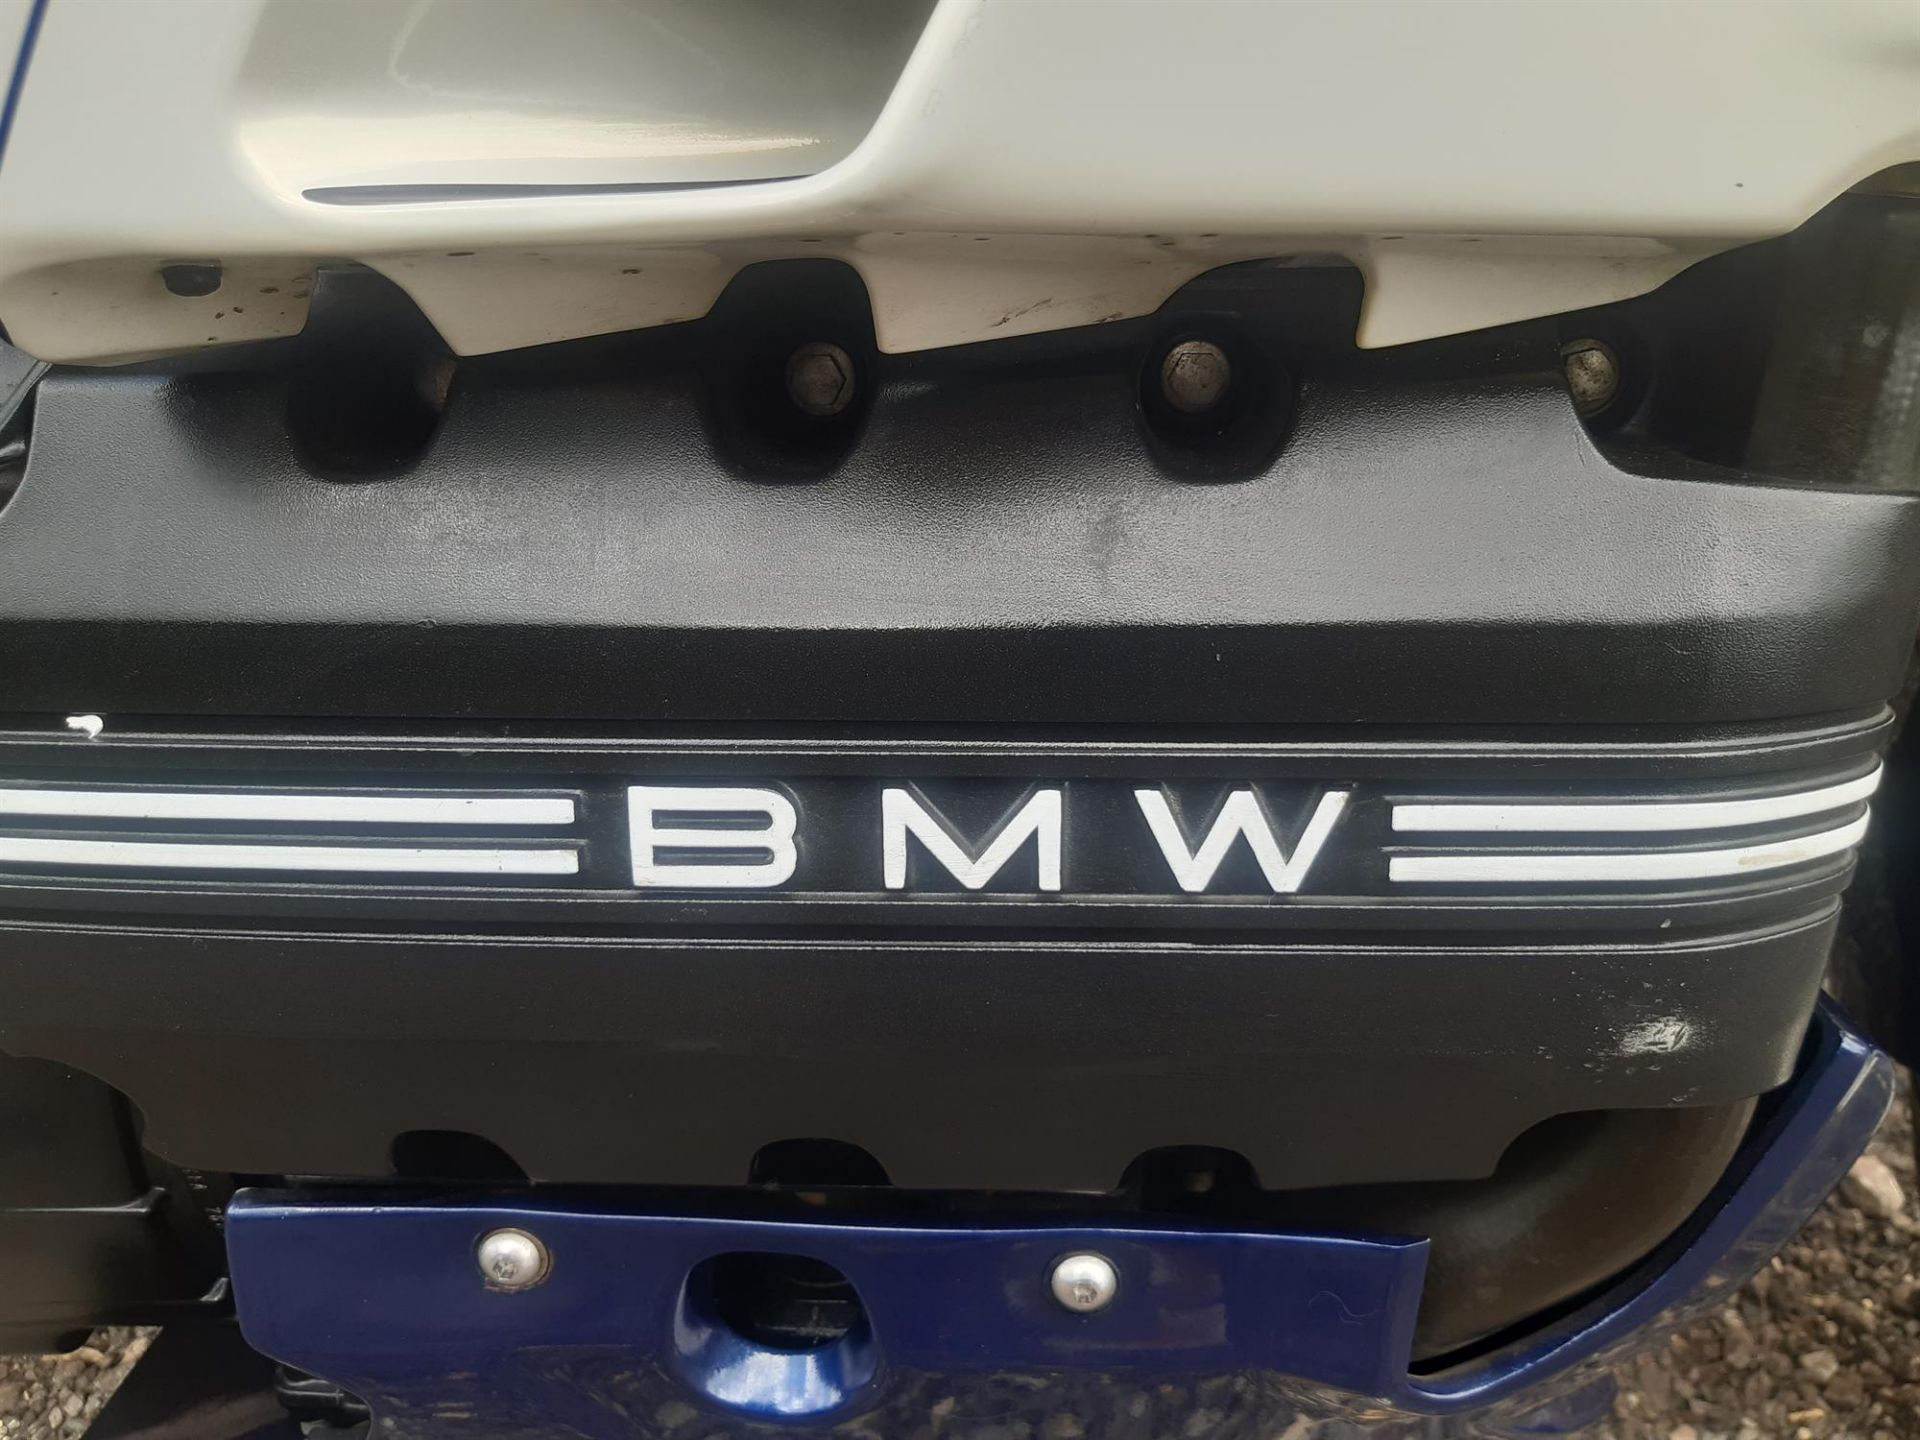 1989 BMW K100 RS 987cc - Image 9 of 10